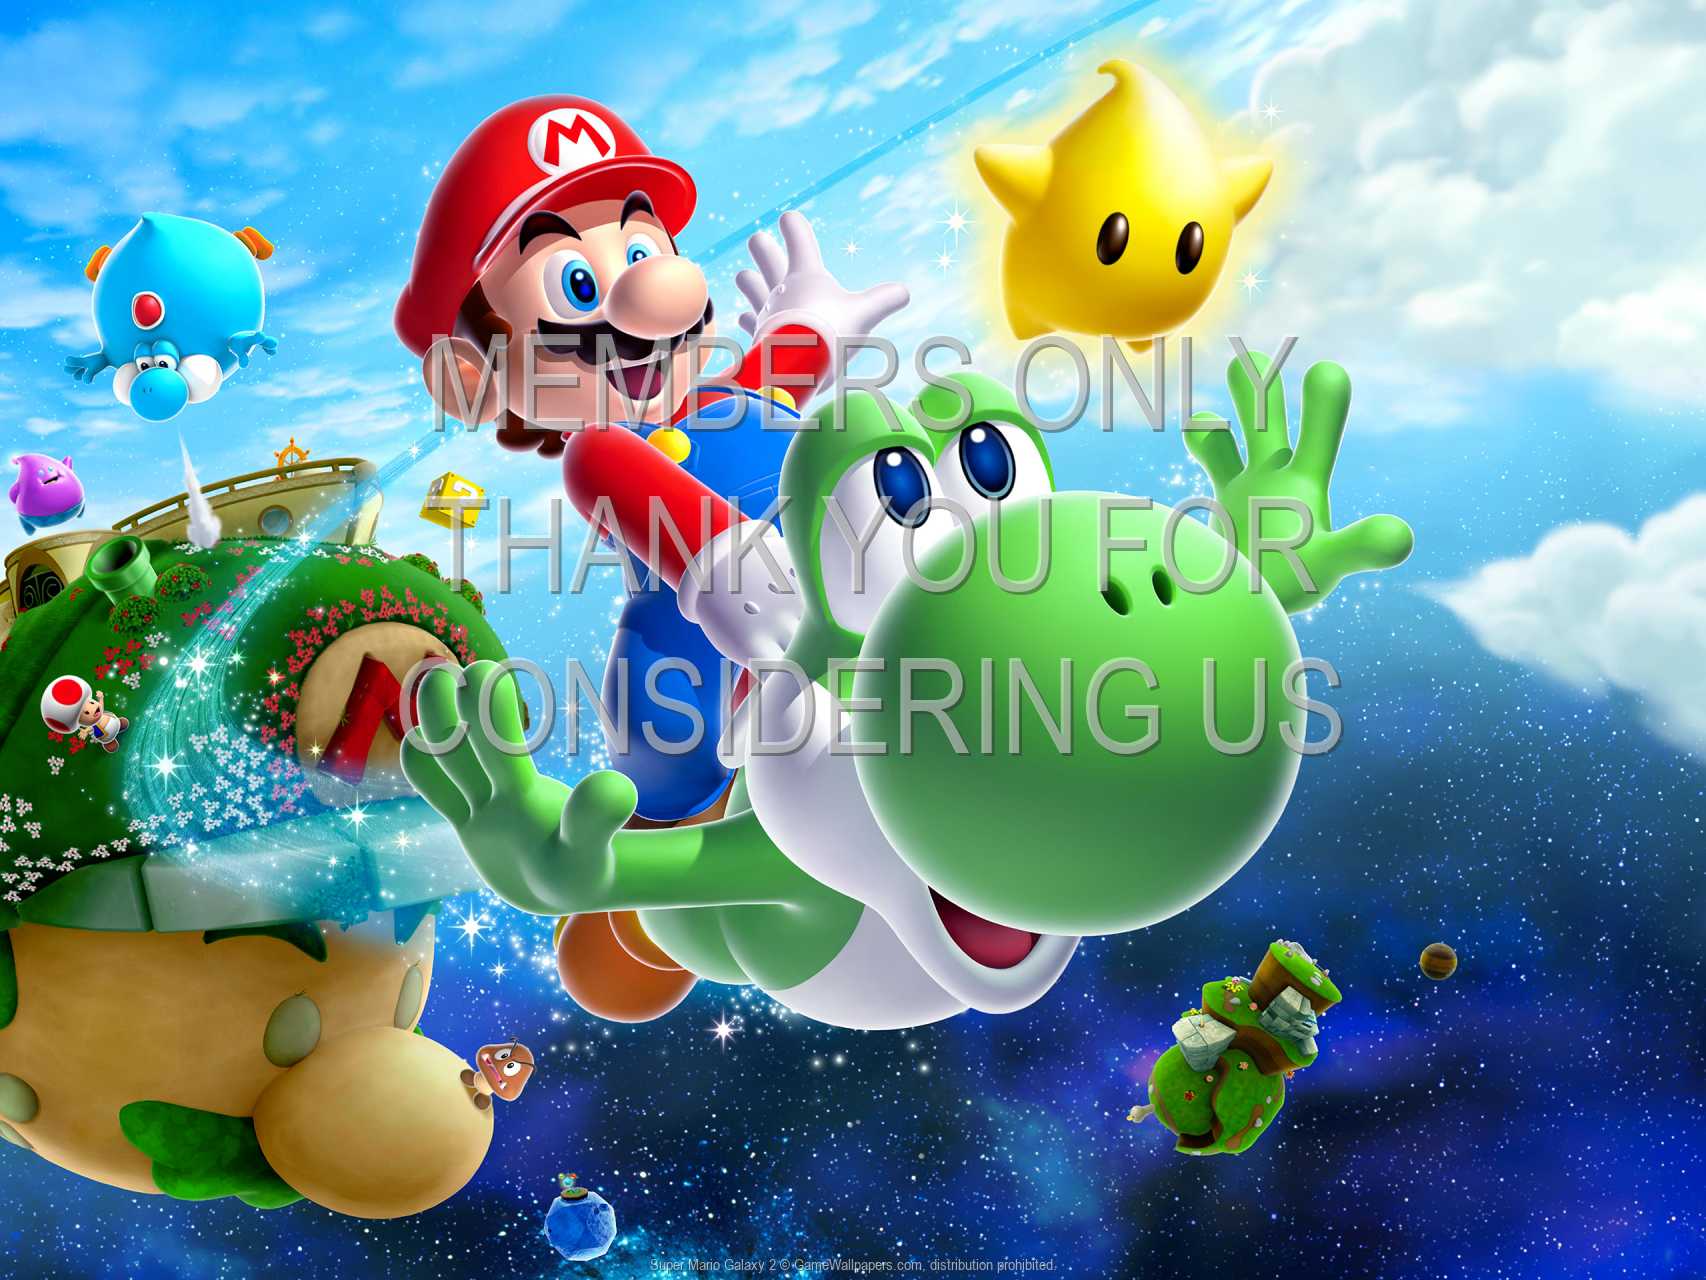 Super Mario Galaxy 2 720p%20Horizontal Mobile wallpaper or background 01